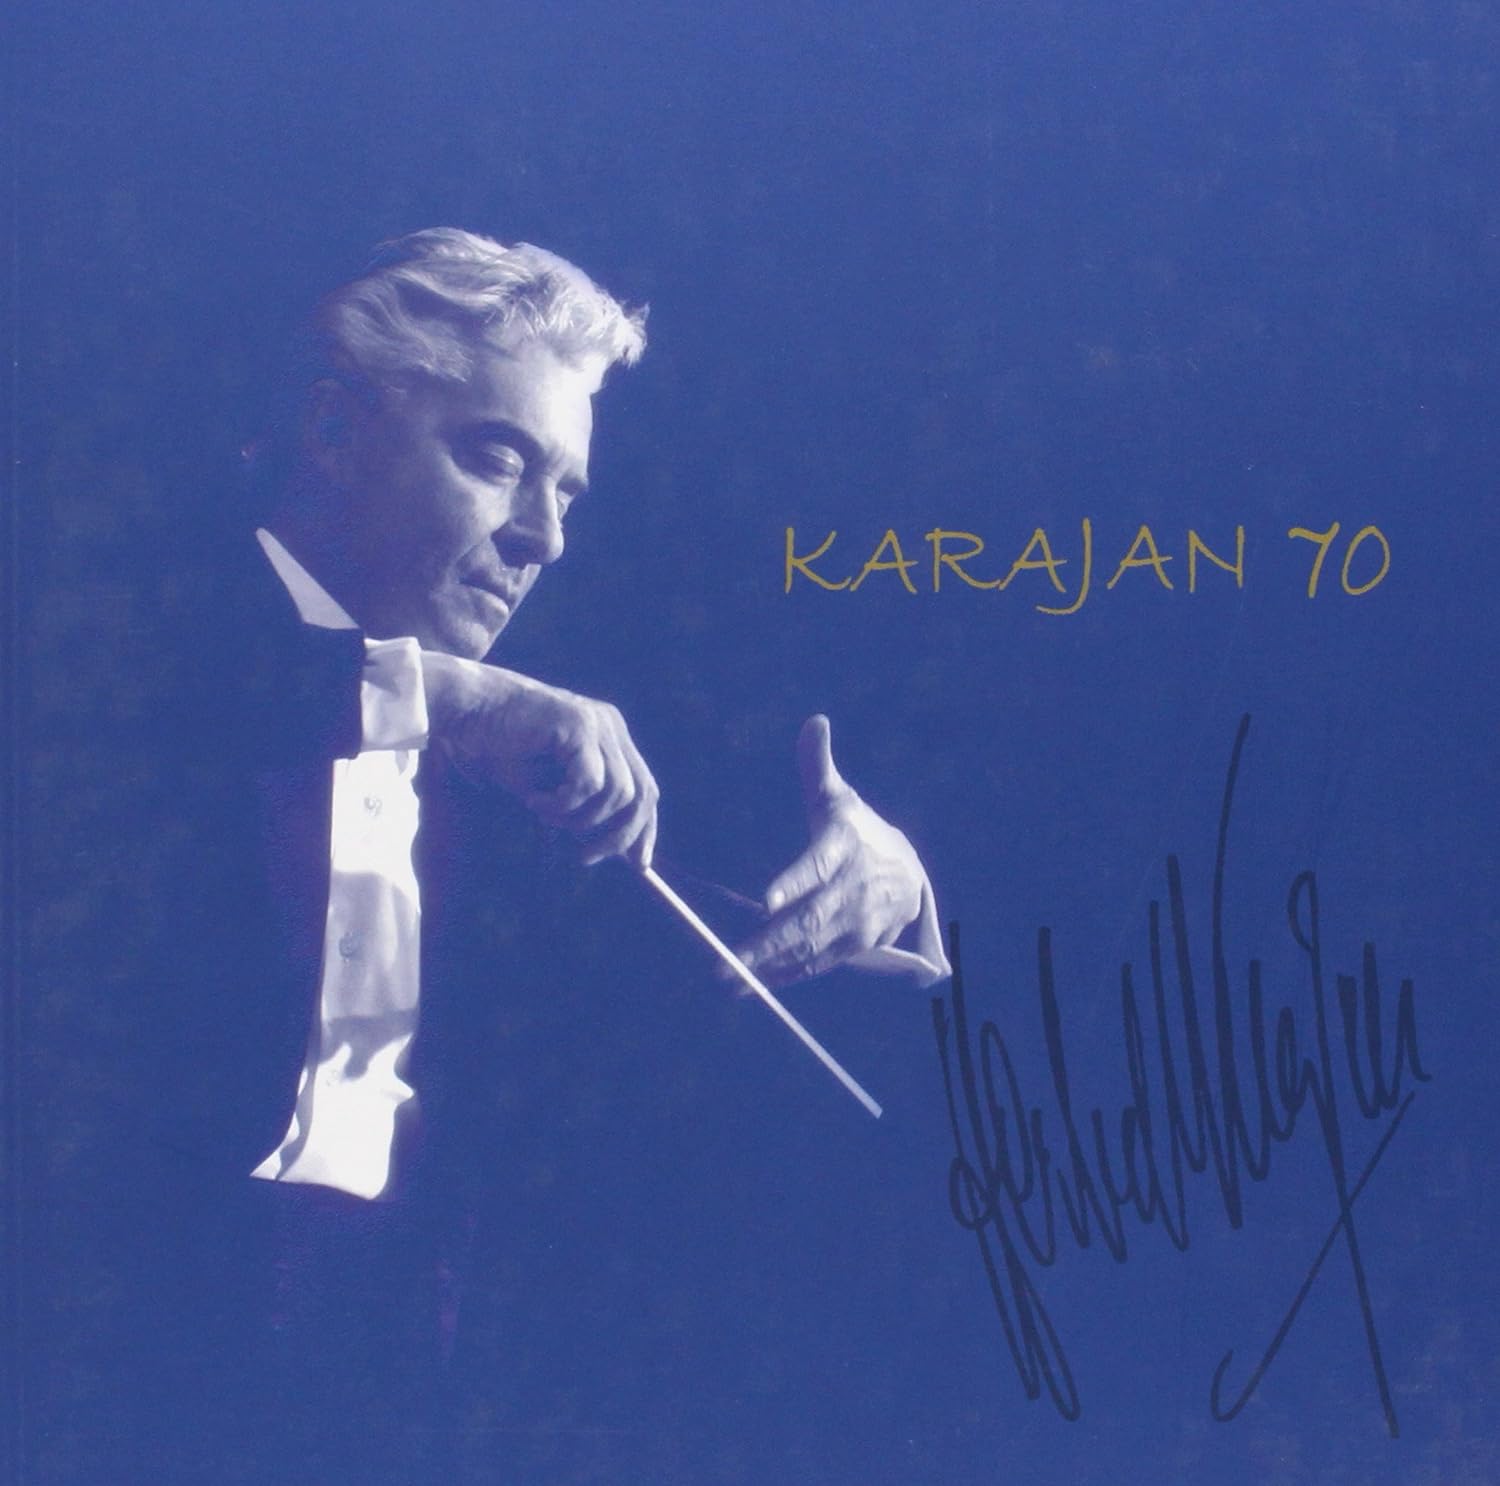 Herbert Von Karajan カラヤン70 1970年代ドイツ・グラモフォン・レコーディング Karajan 70 - 1970 DG Recordings CD 88枚組 韓国盤【新品】管理105UR